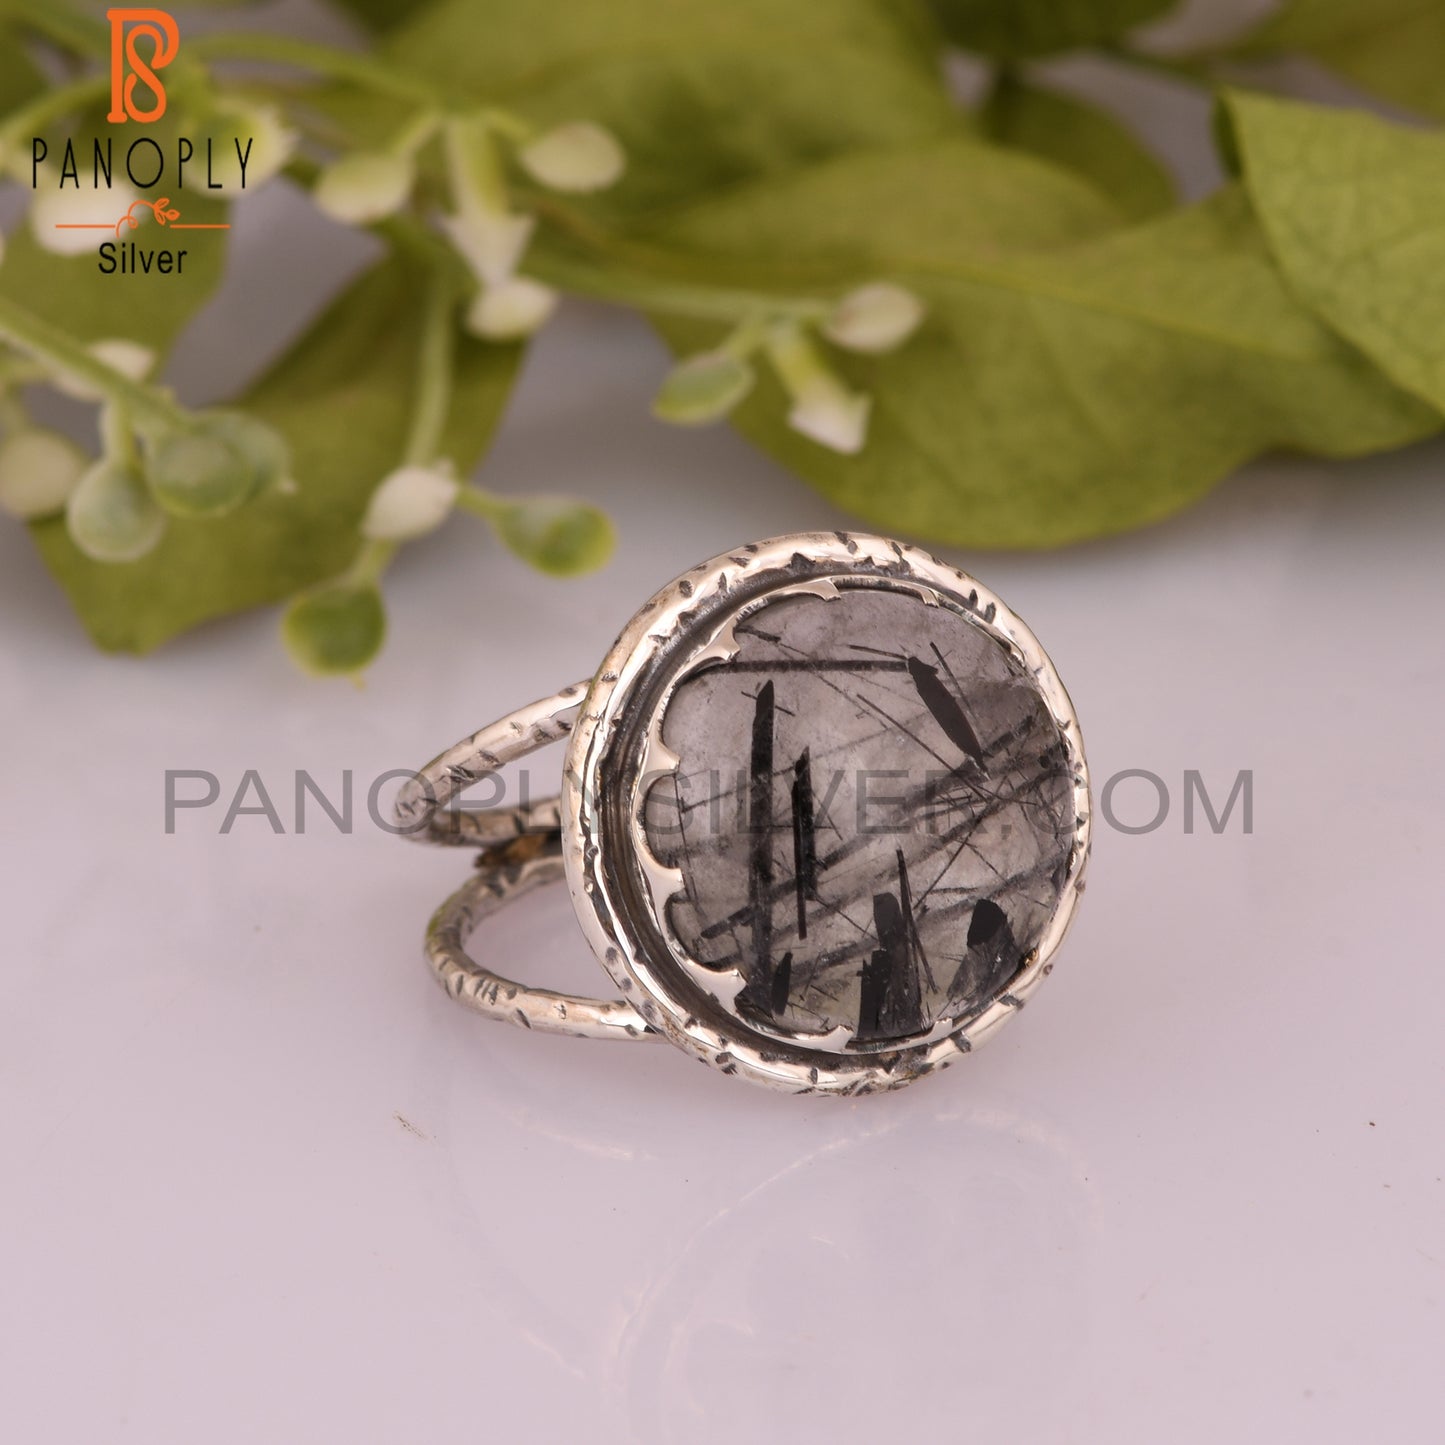 Black Rutile Ring Round 925 Sterling Silver Ring